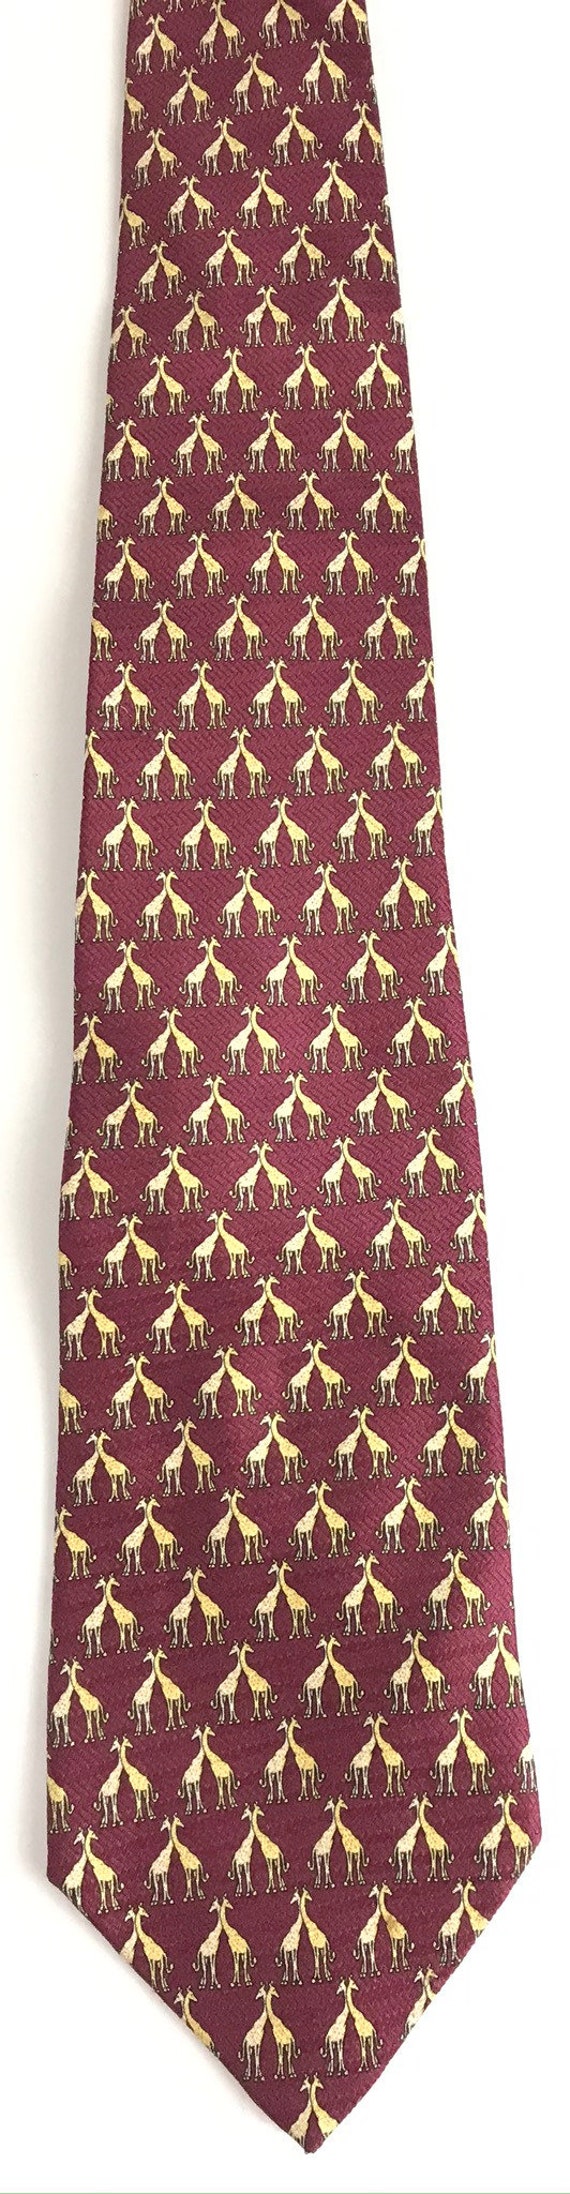 90s Giraffes Tie, Red & Yellow Giraffes Tie, Micr… - image 2